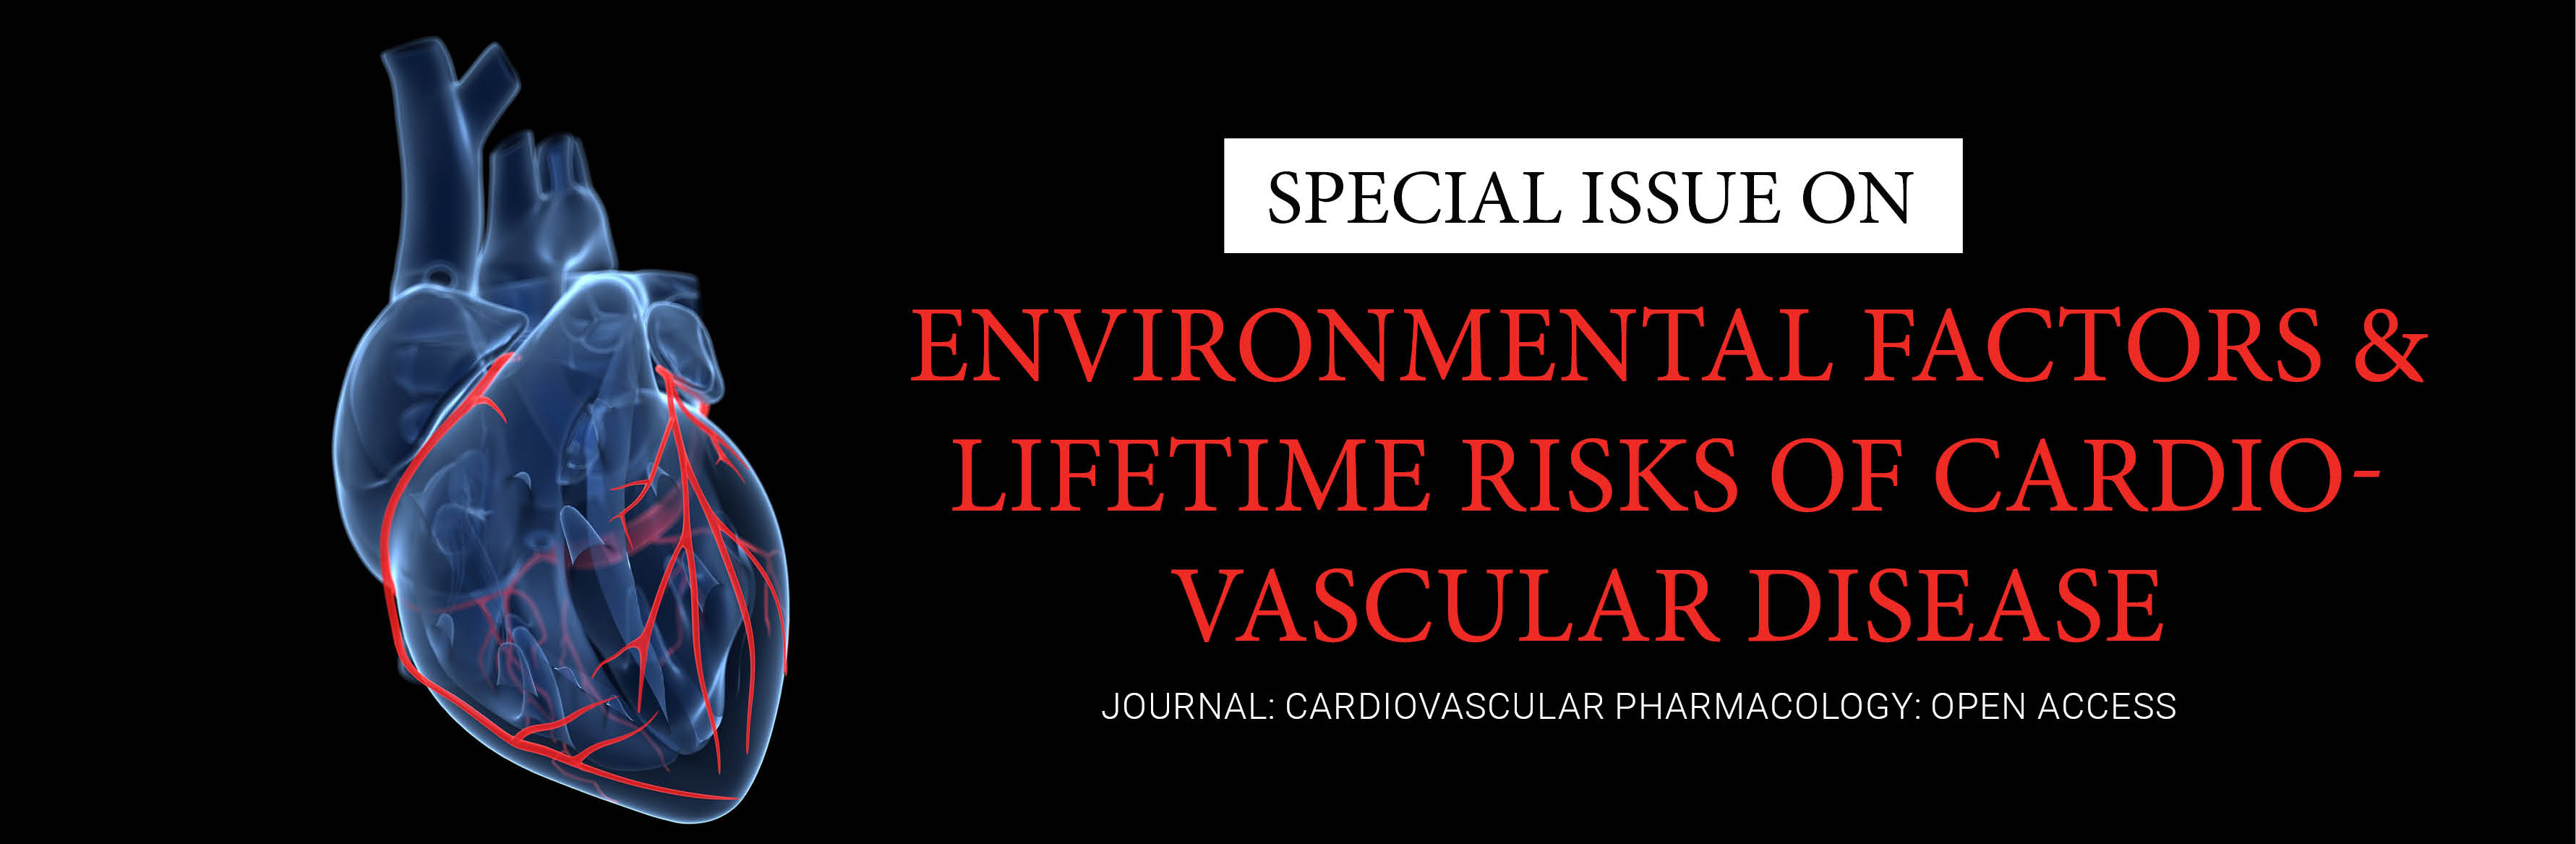 environmental-factors--lifetime-risks-of-cardiovascular-disease-2090.jpg